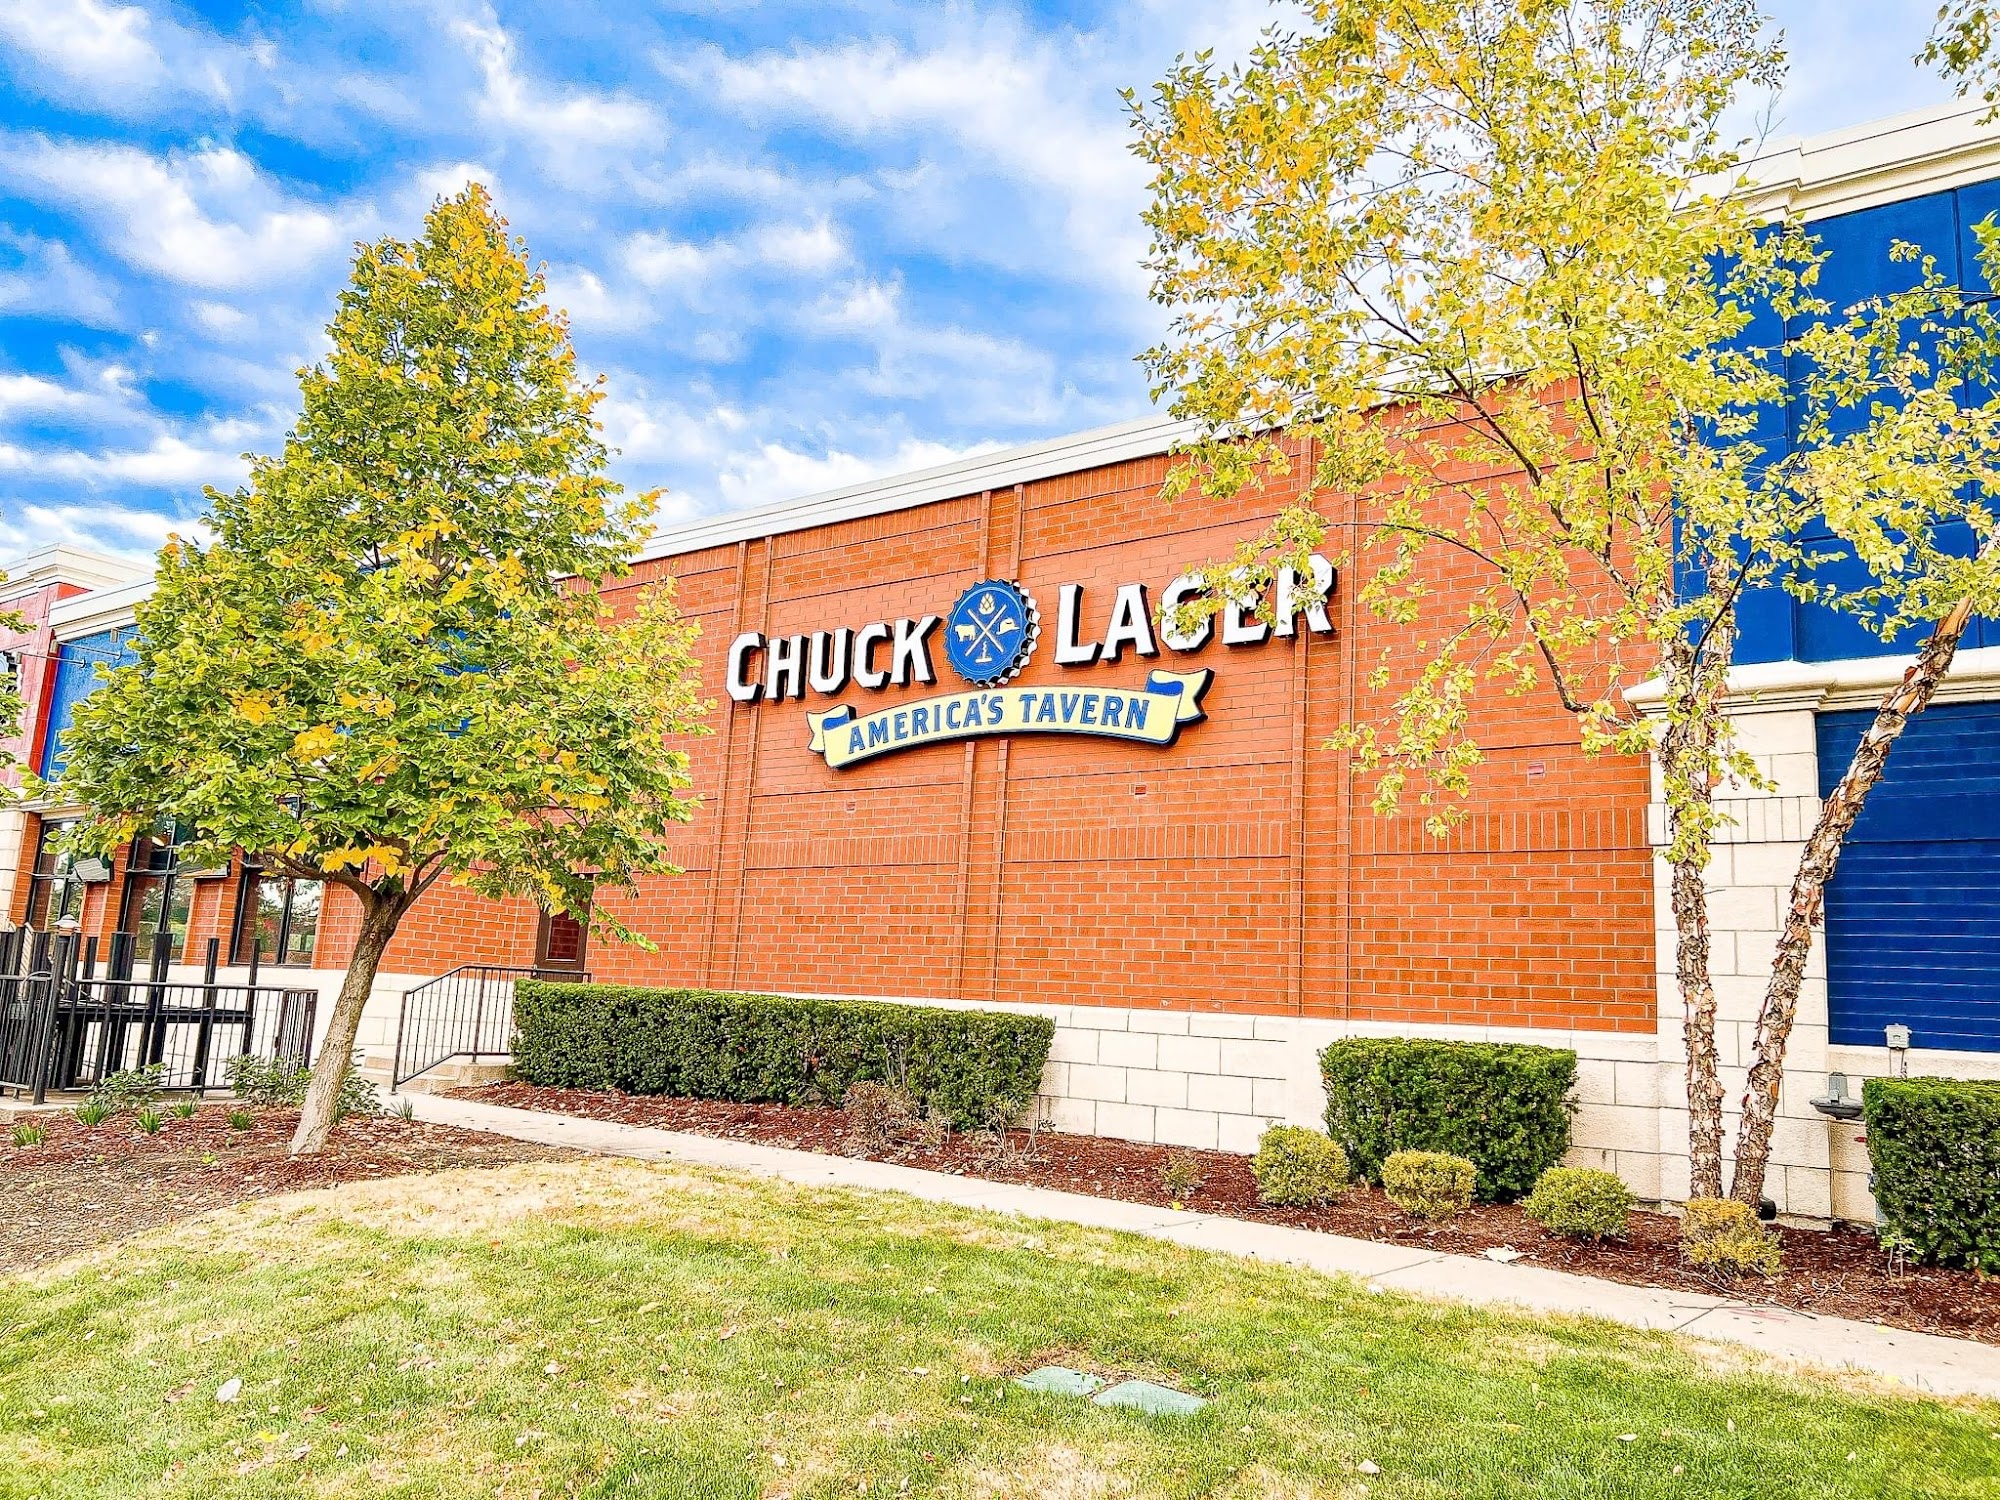 Chuck Lager America's Tavern